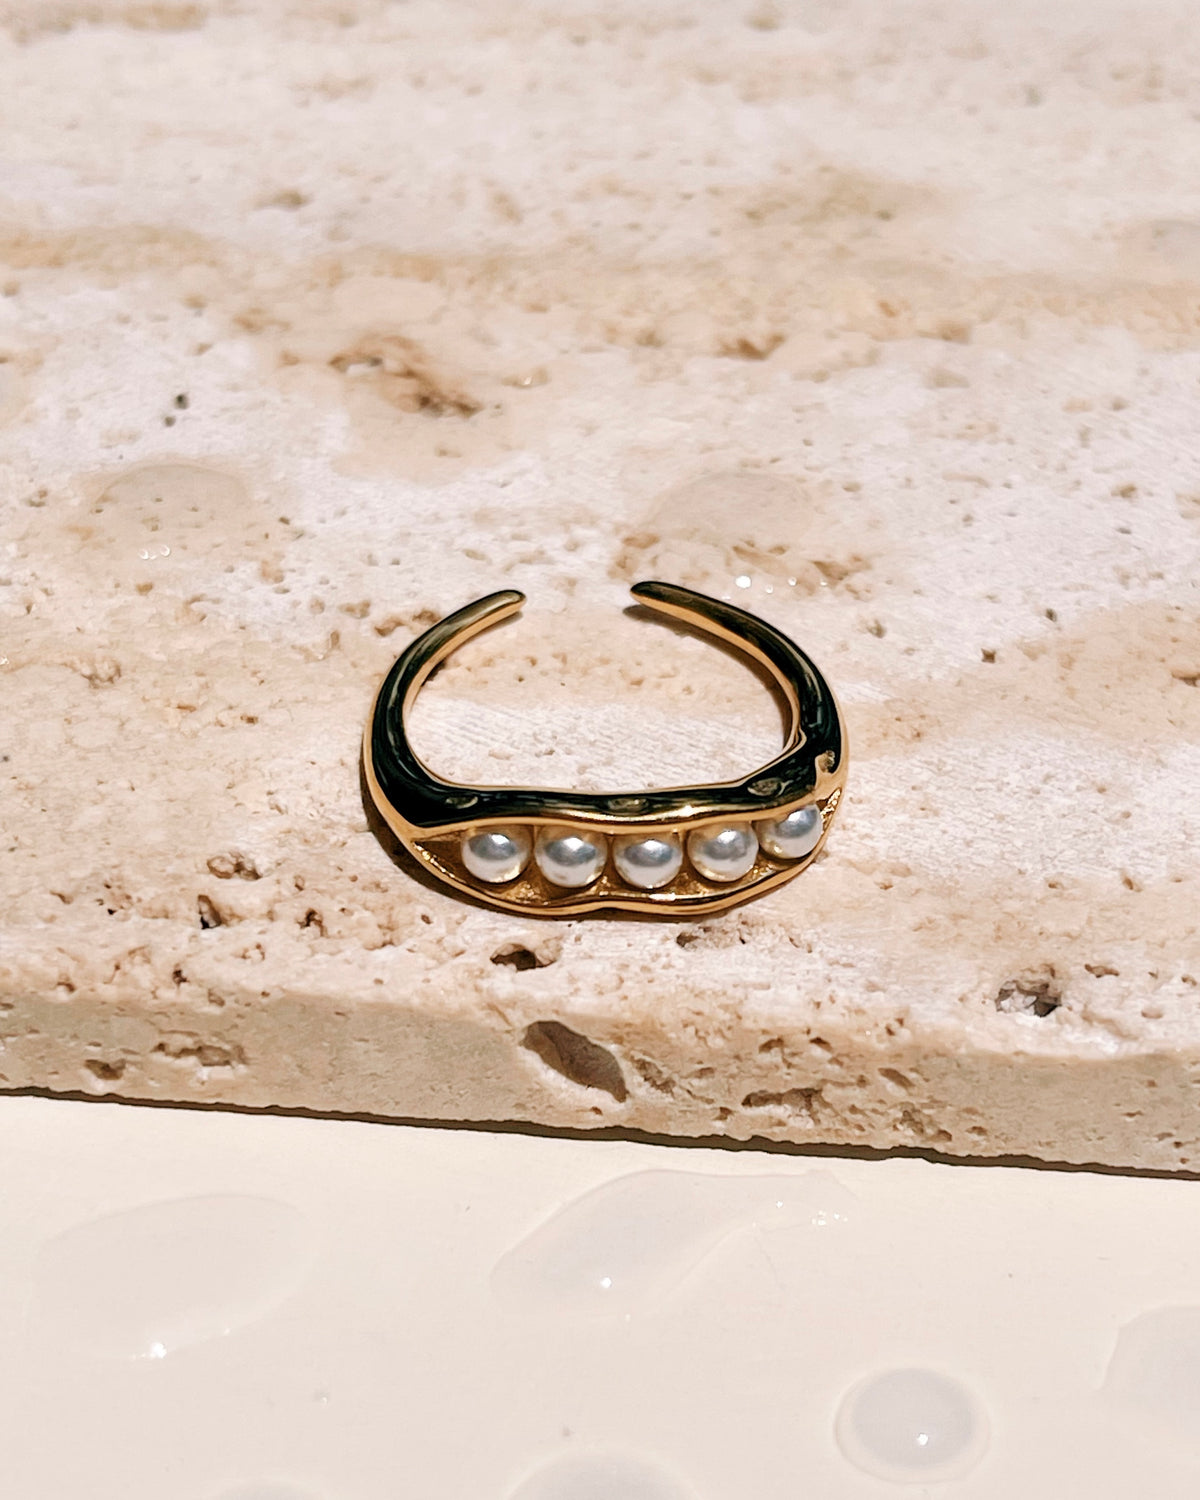 Darla Pearl Pea Pods Top Design Open Gold Ring